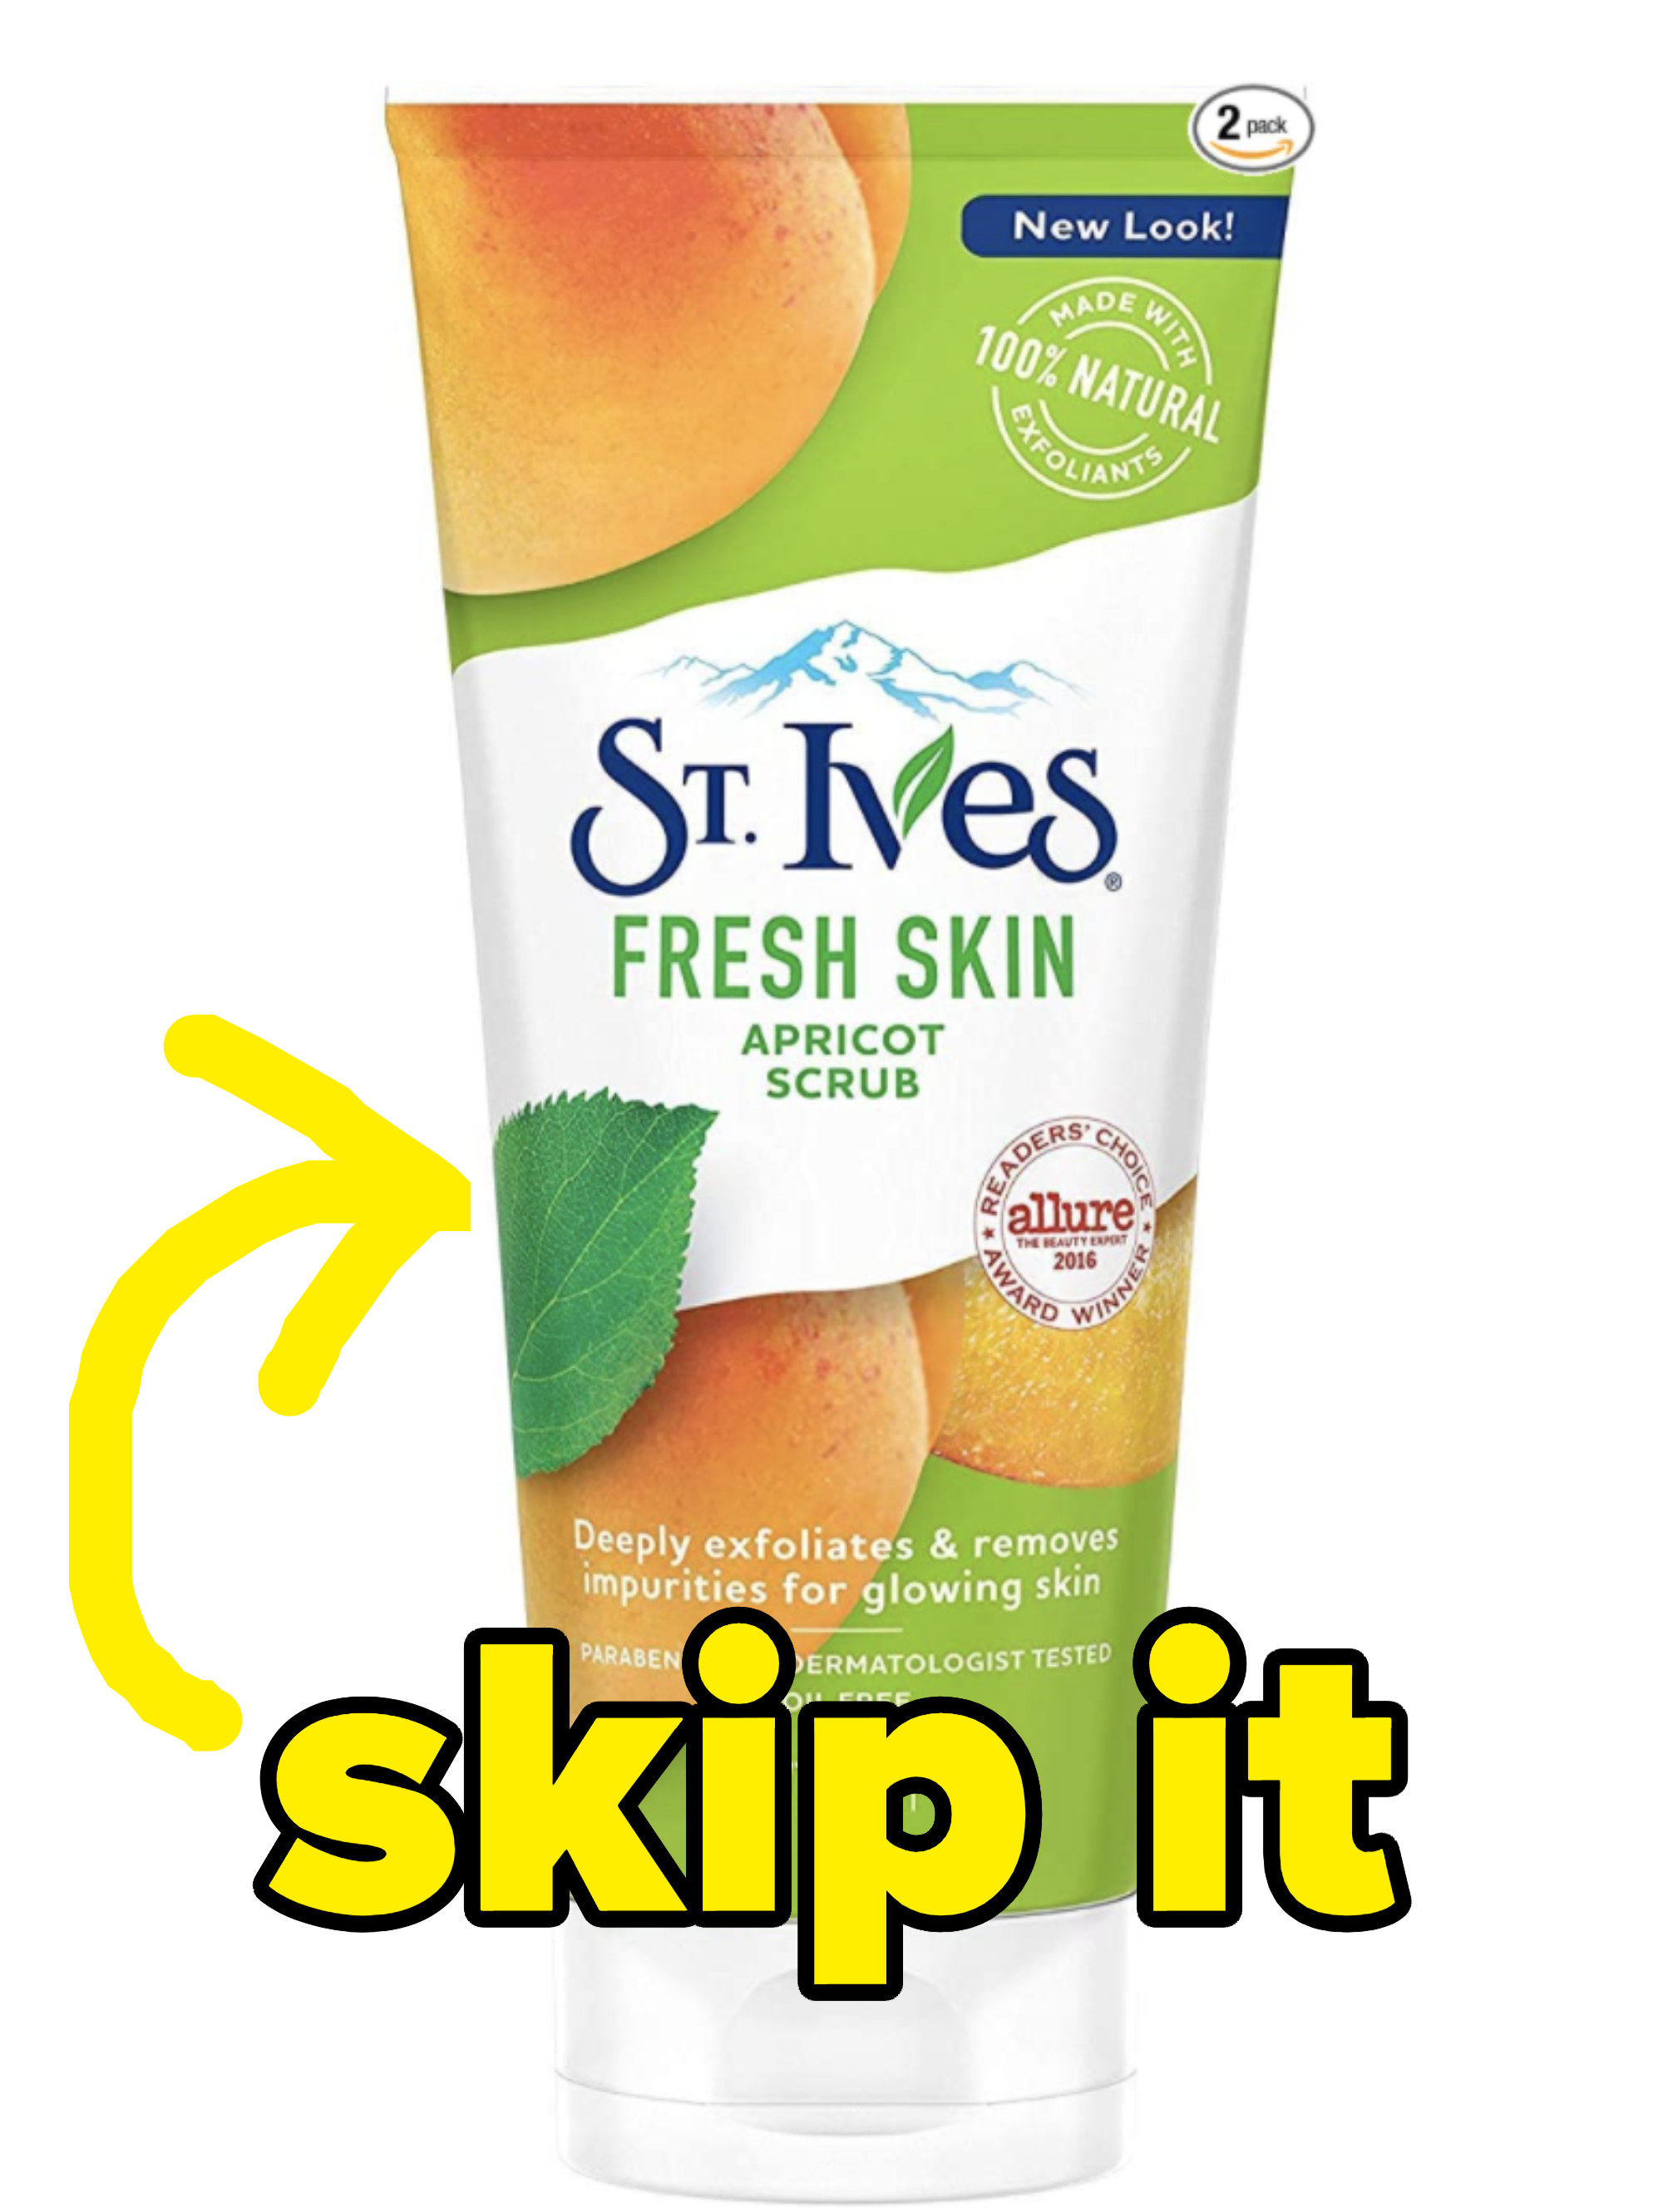 St. Ives scrub labeled &quot;skip it&quot;